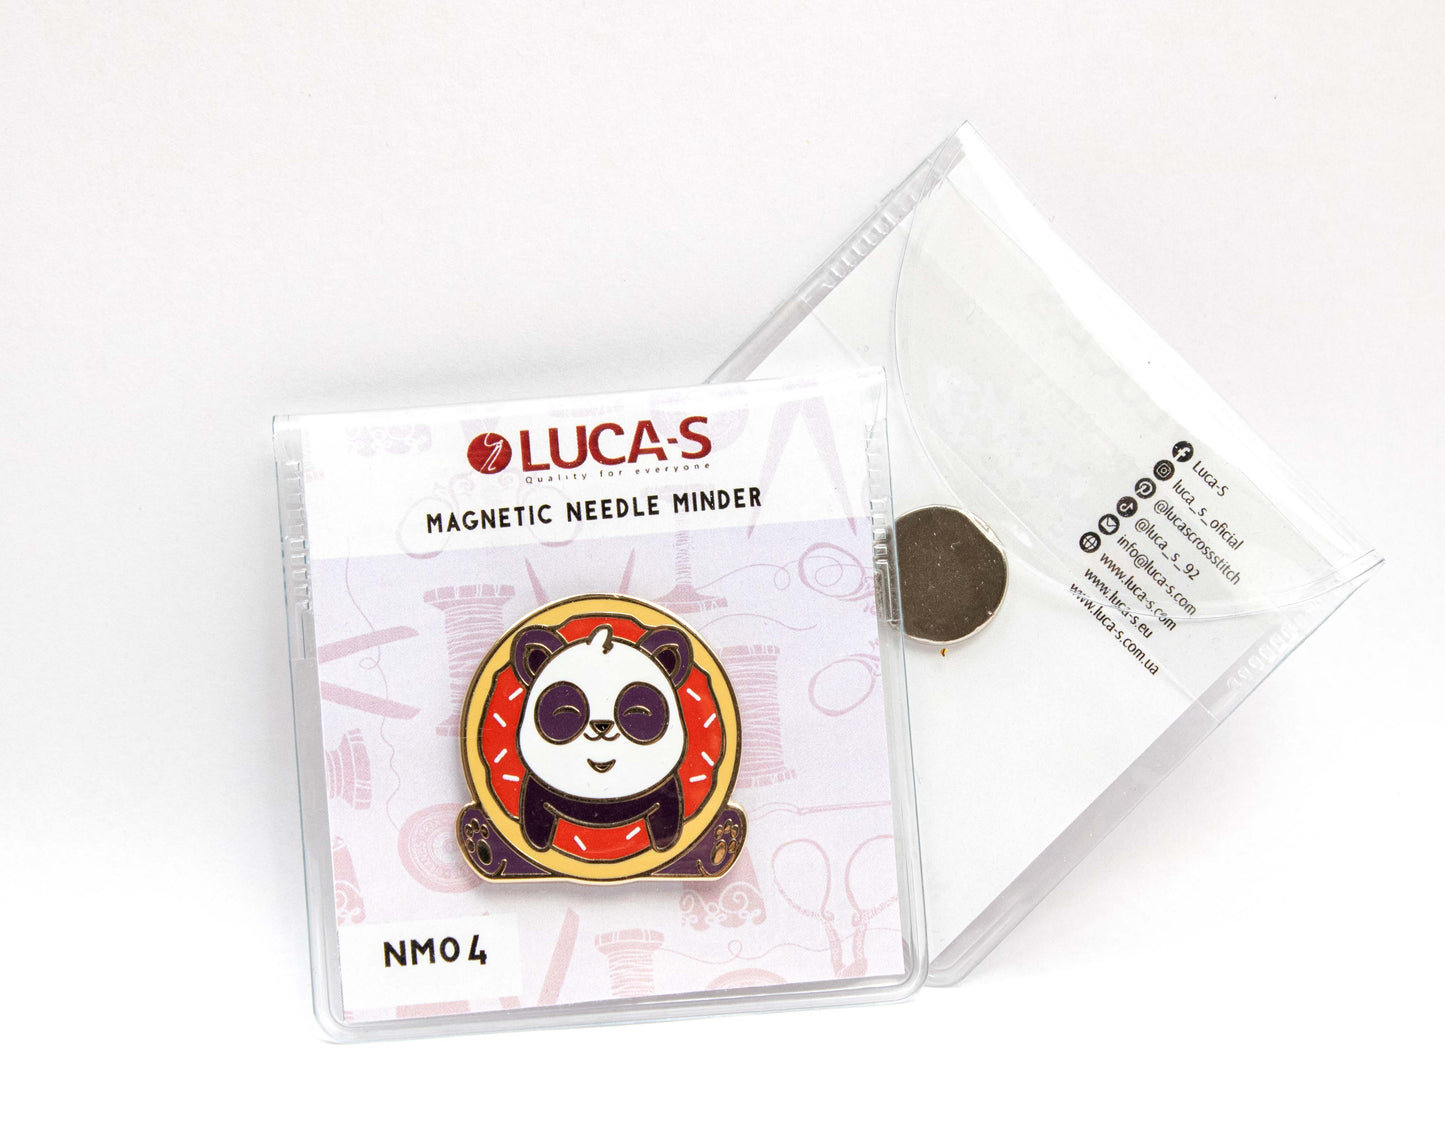 Magnetic Needle Minder Luca-S - Panda, NM04